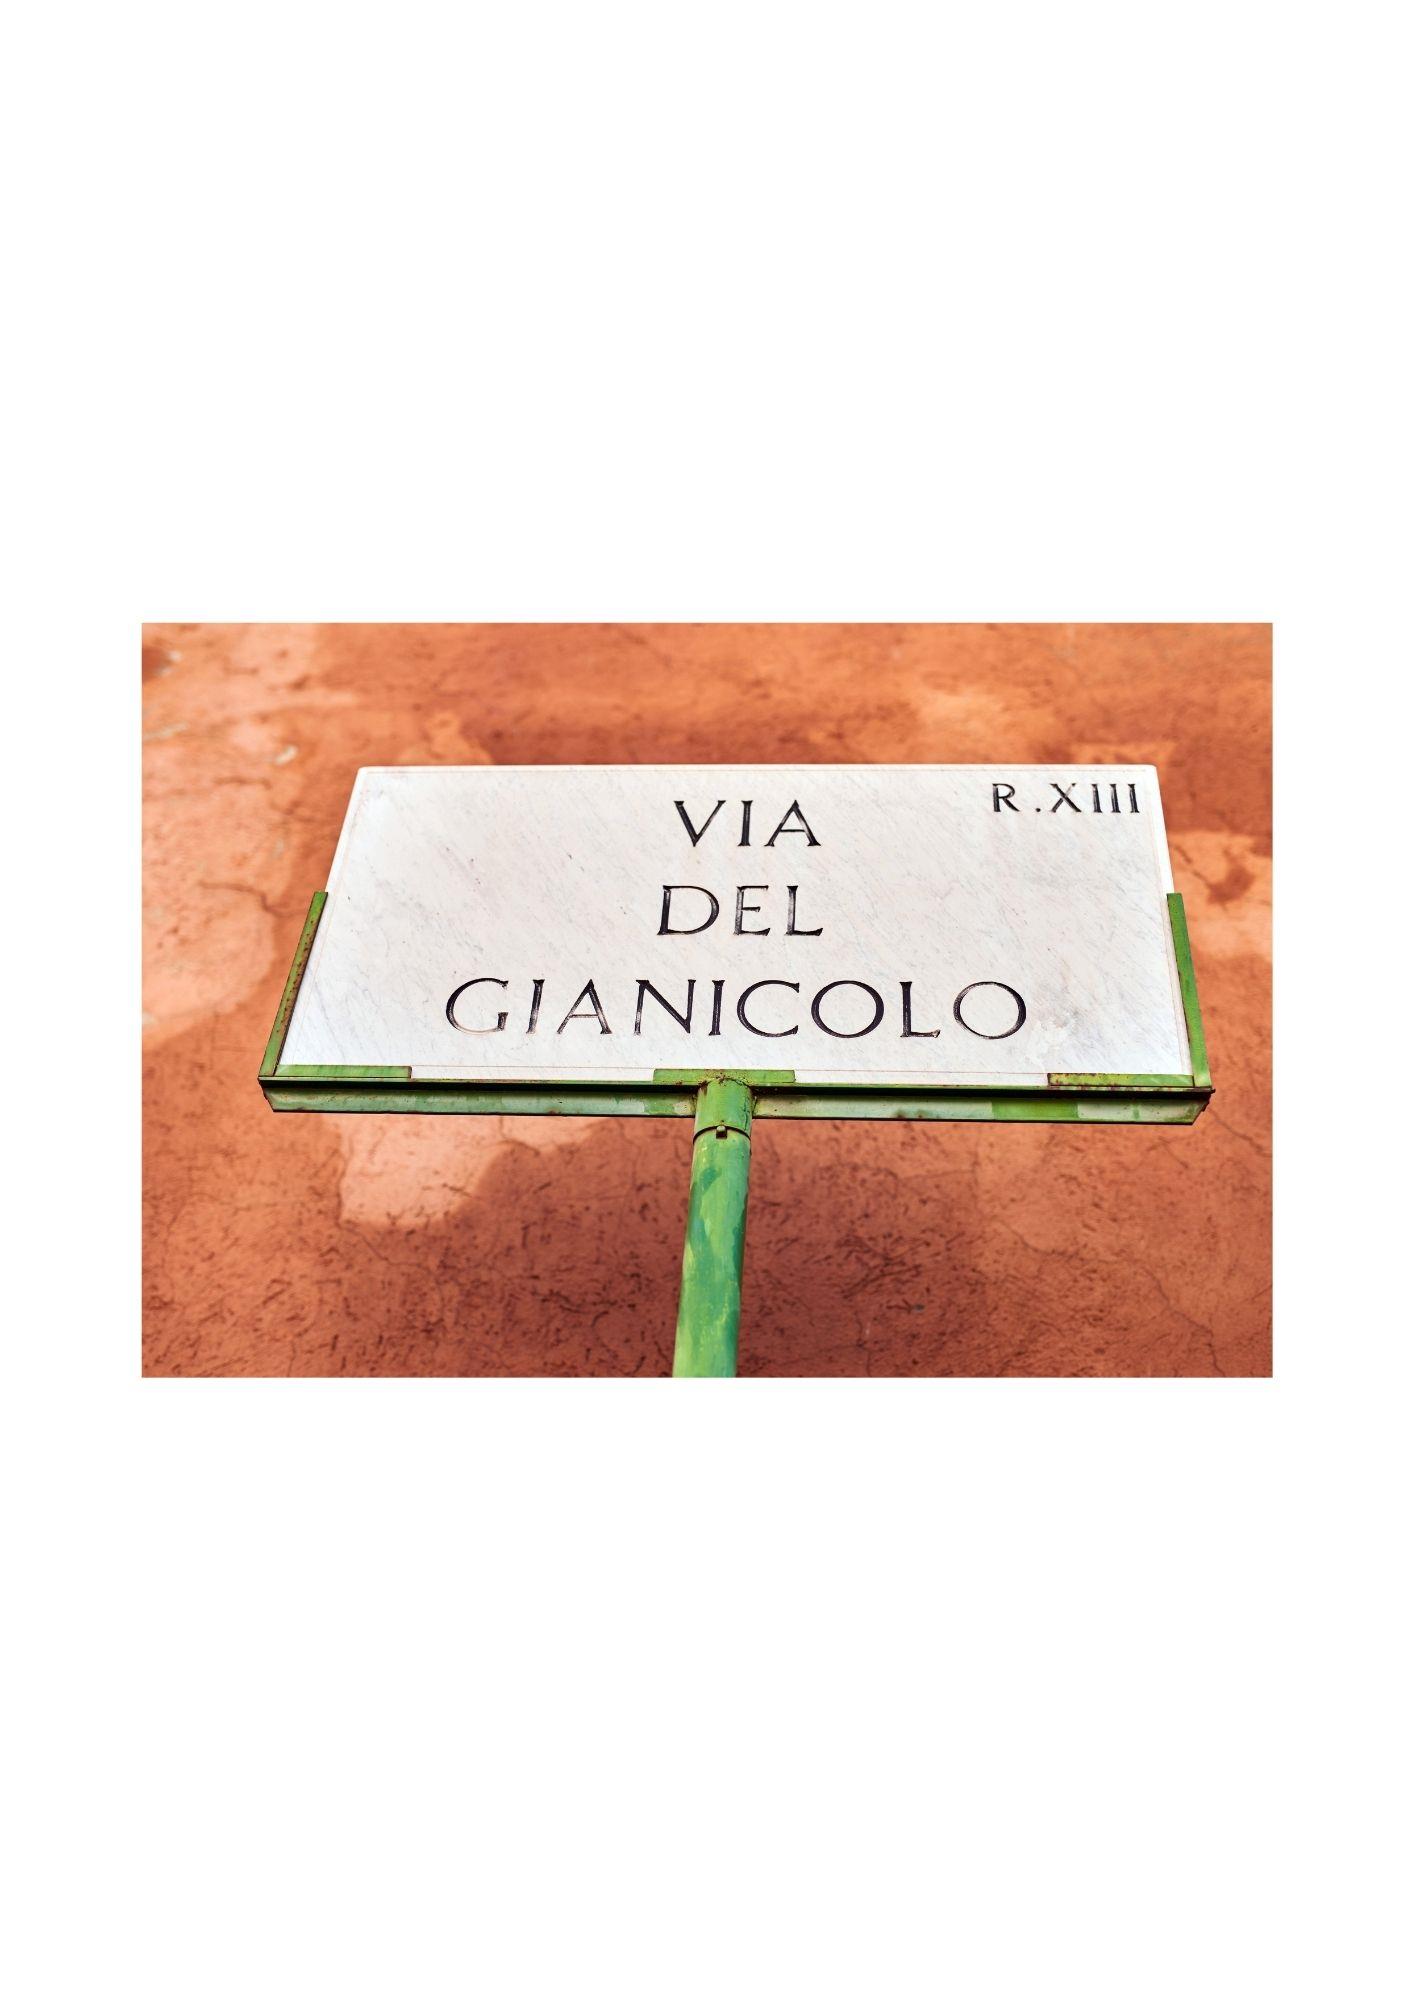 Gianicolo-Free-Tour-The-best-views-of-Rome-2